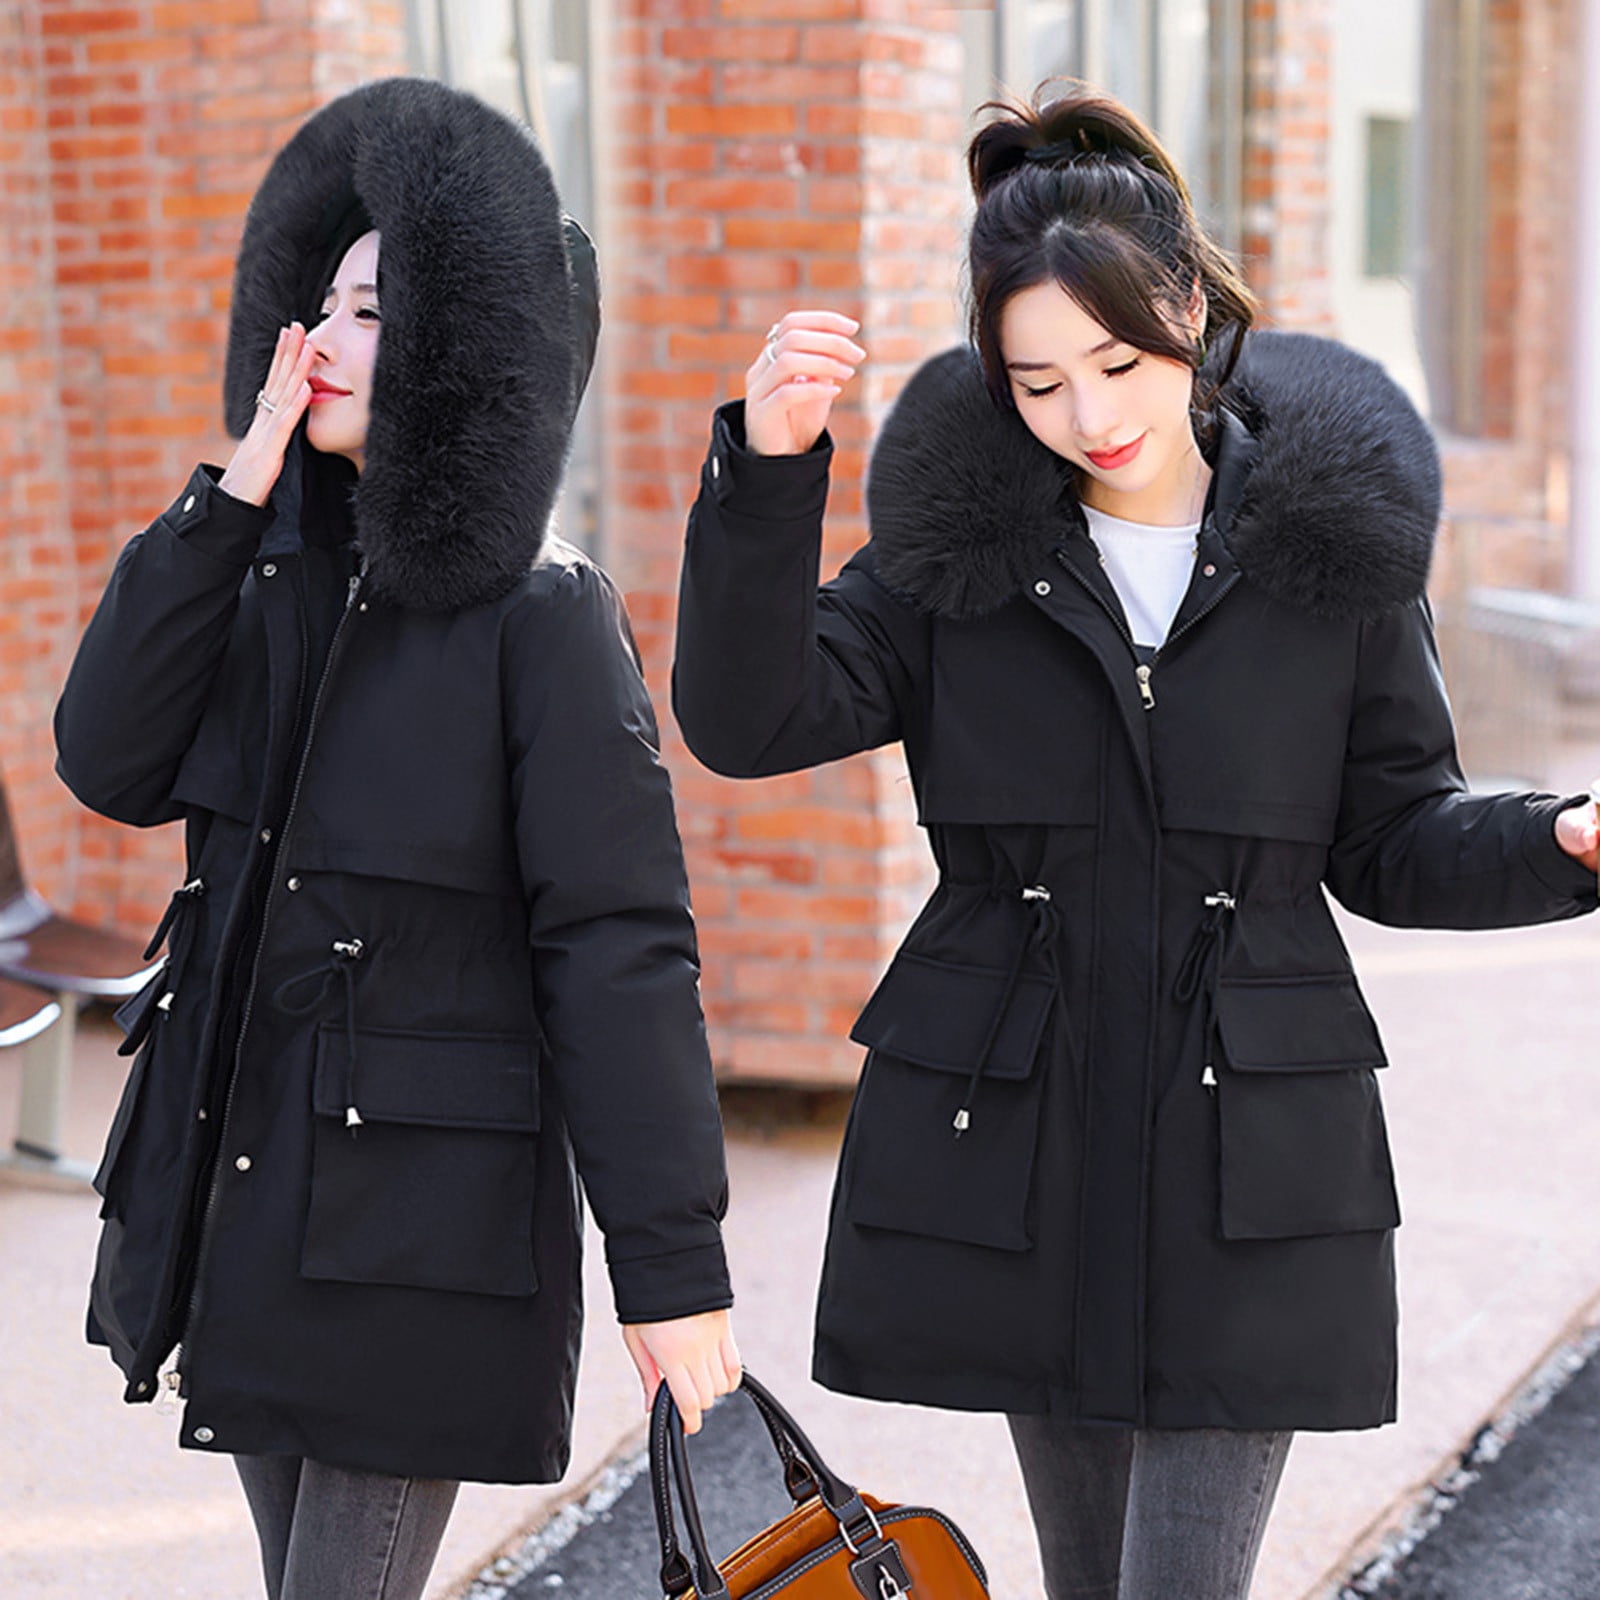 Herrnalise Womens Winter Jacket Warm Overcoat Slim Fur-Collar Zipper  Thicker Coat Outwear Women Clothes on Clearance 